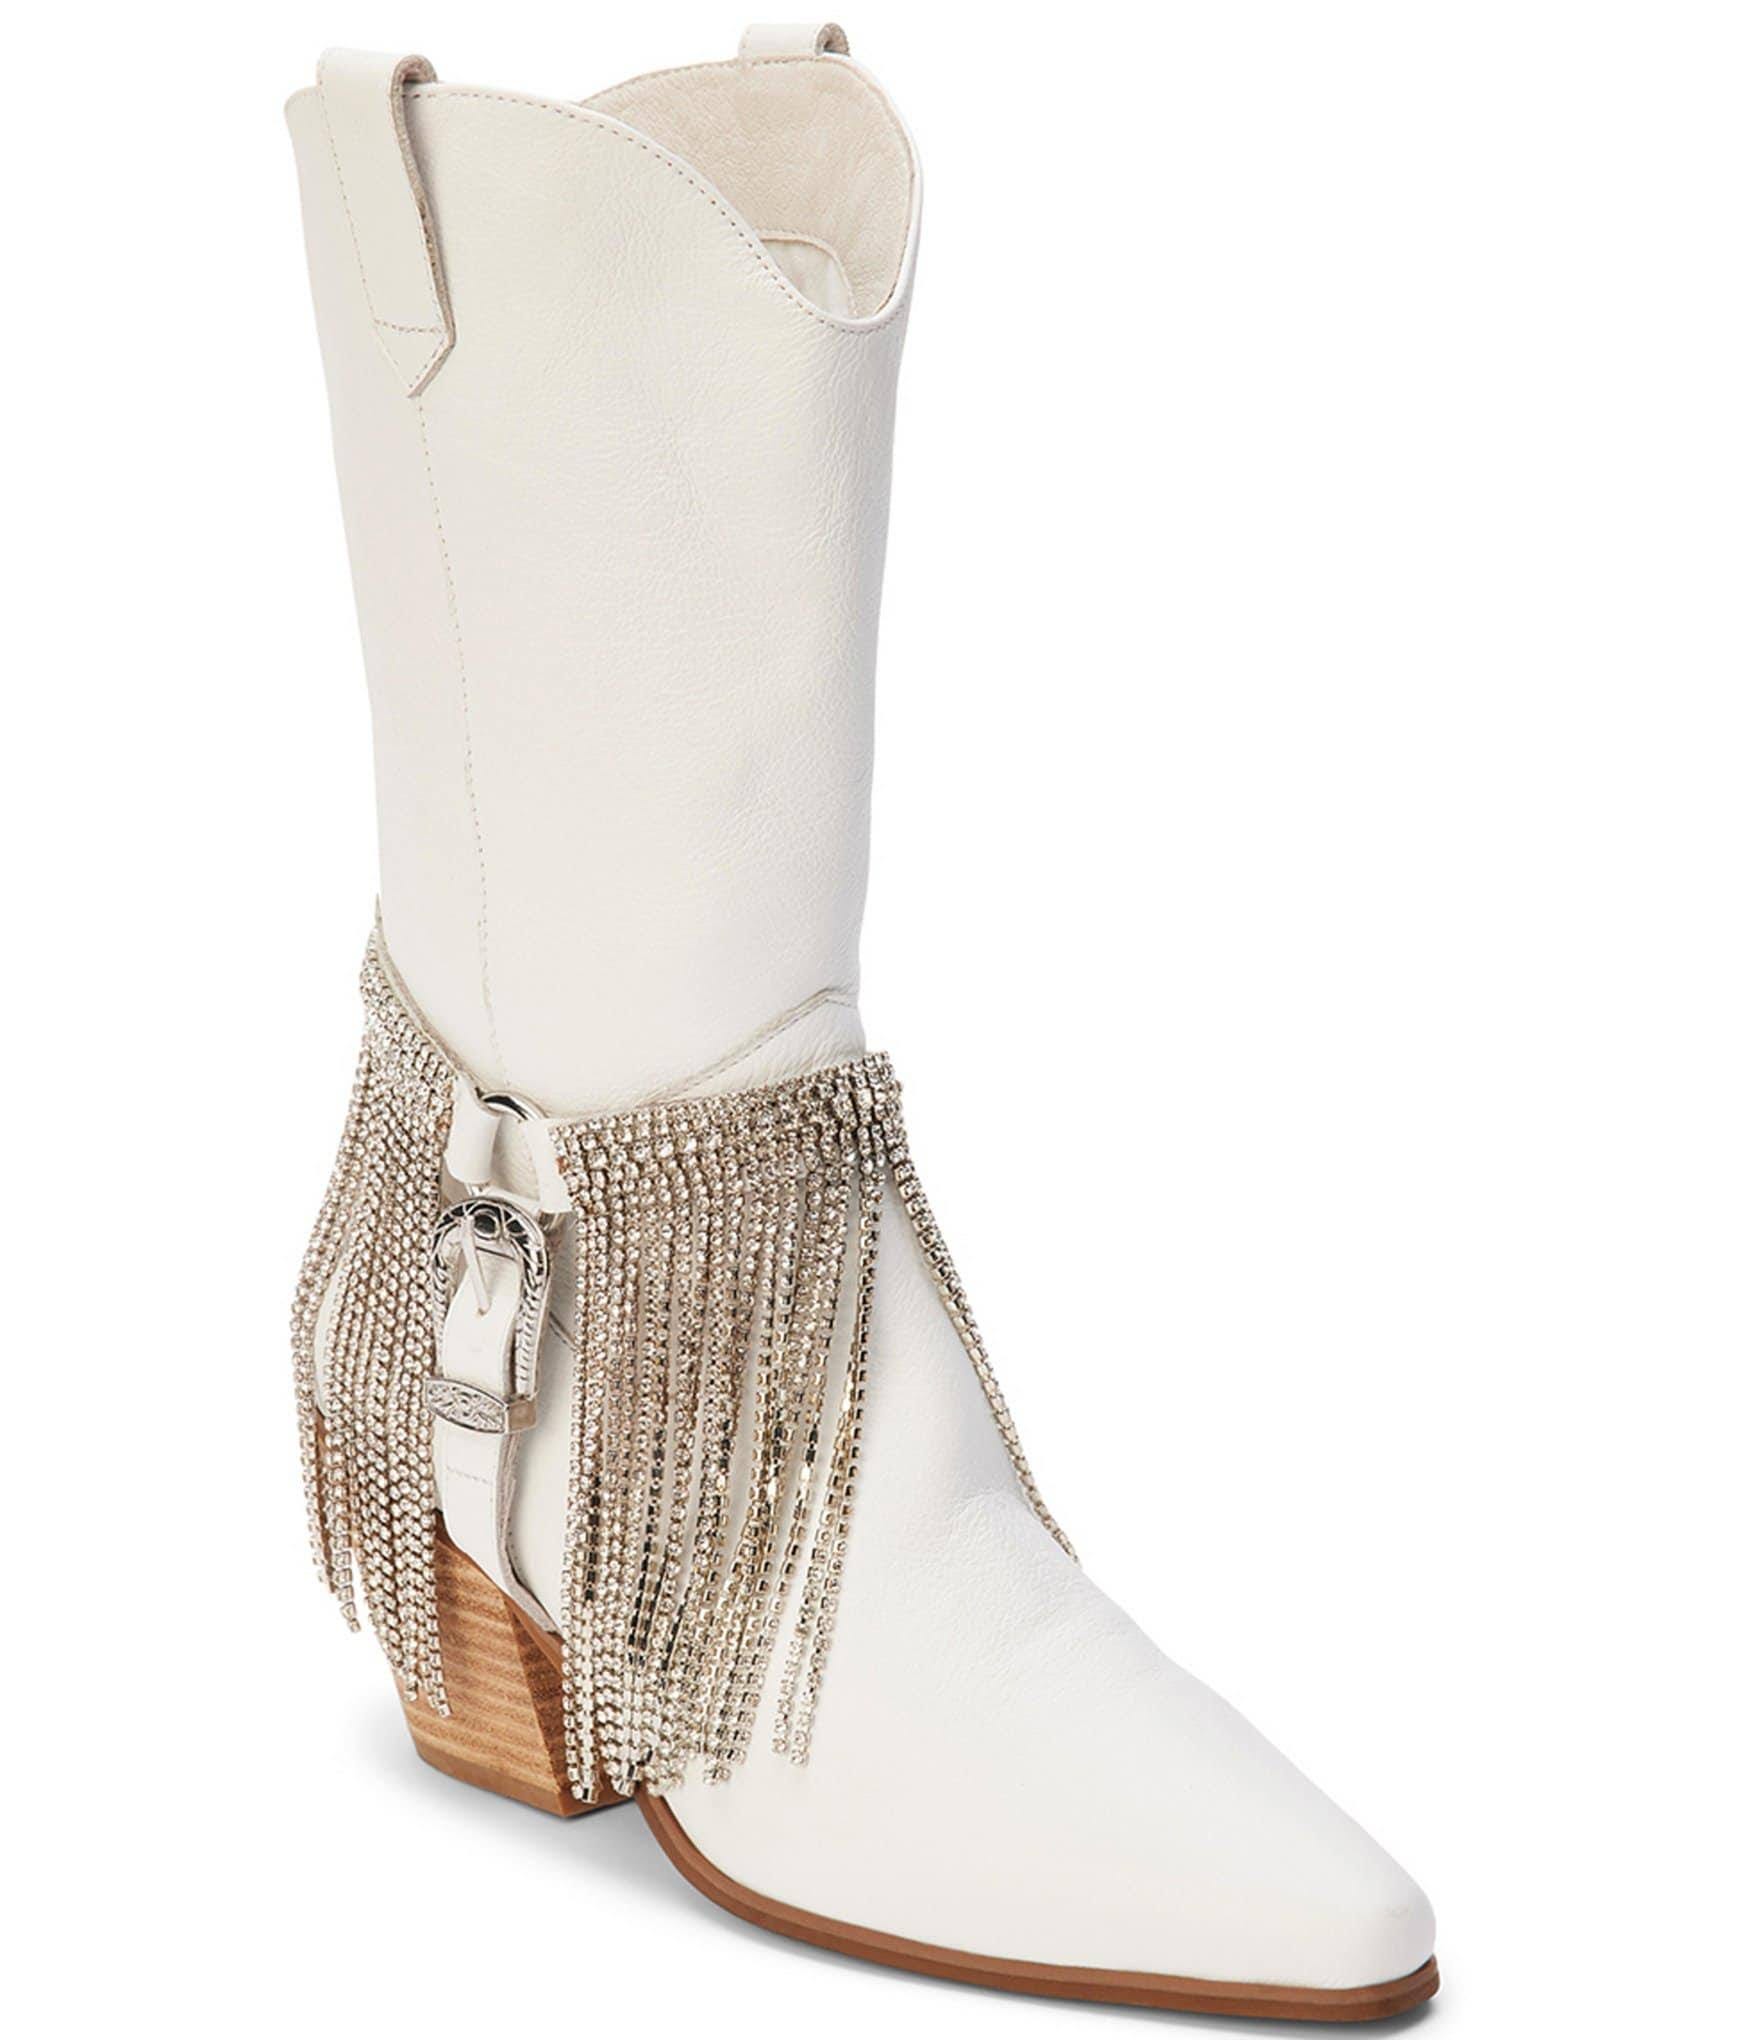 Stylish Western-Inspired White Pointed Toe Boots with Fringe Detailing | Image